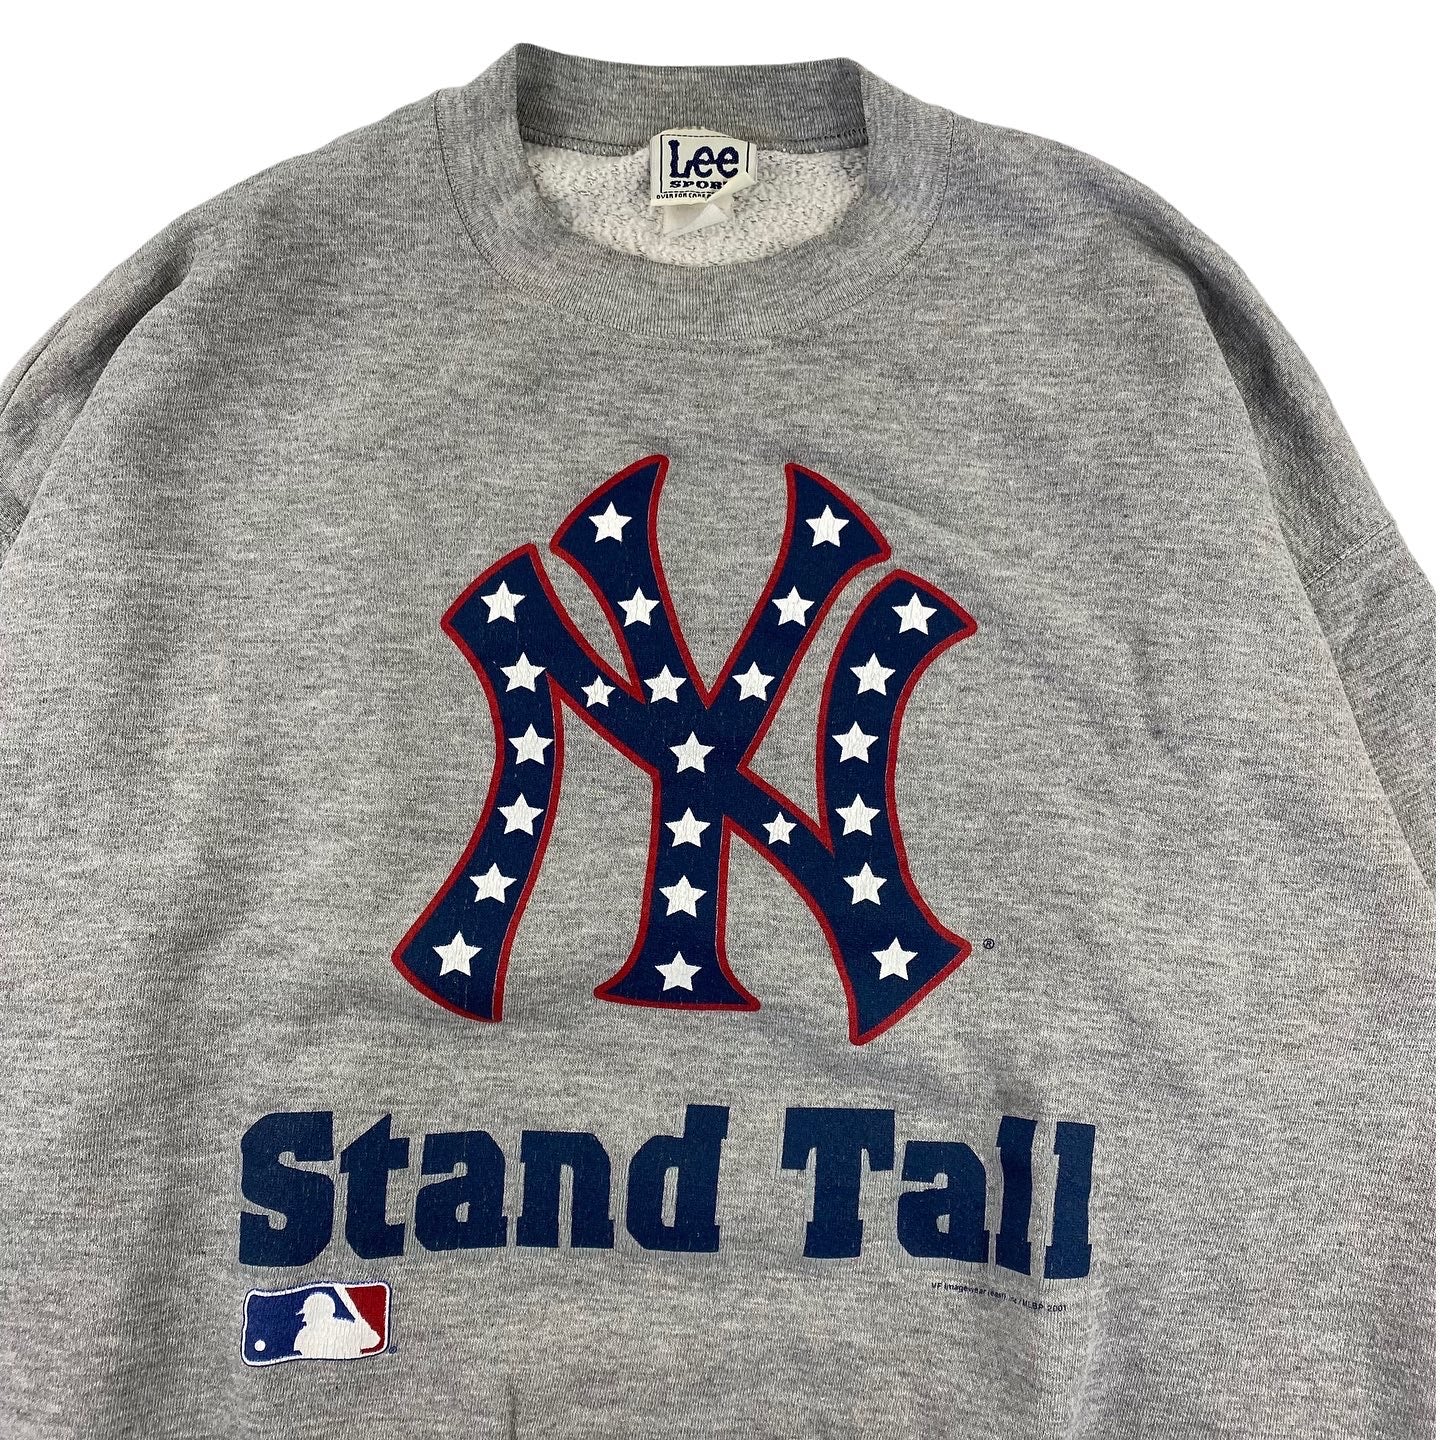 2002 Yankees sweatshirt L/XL